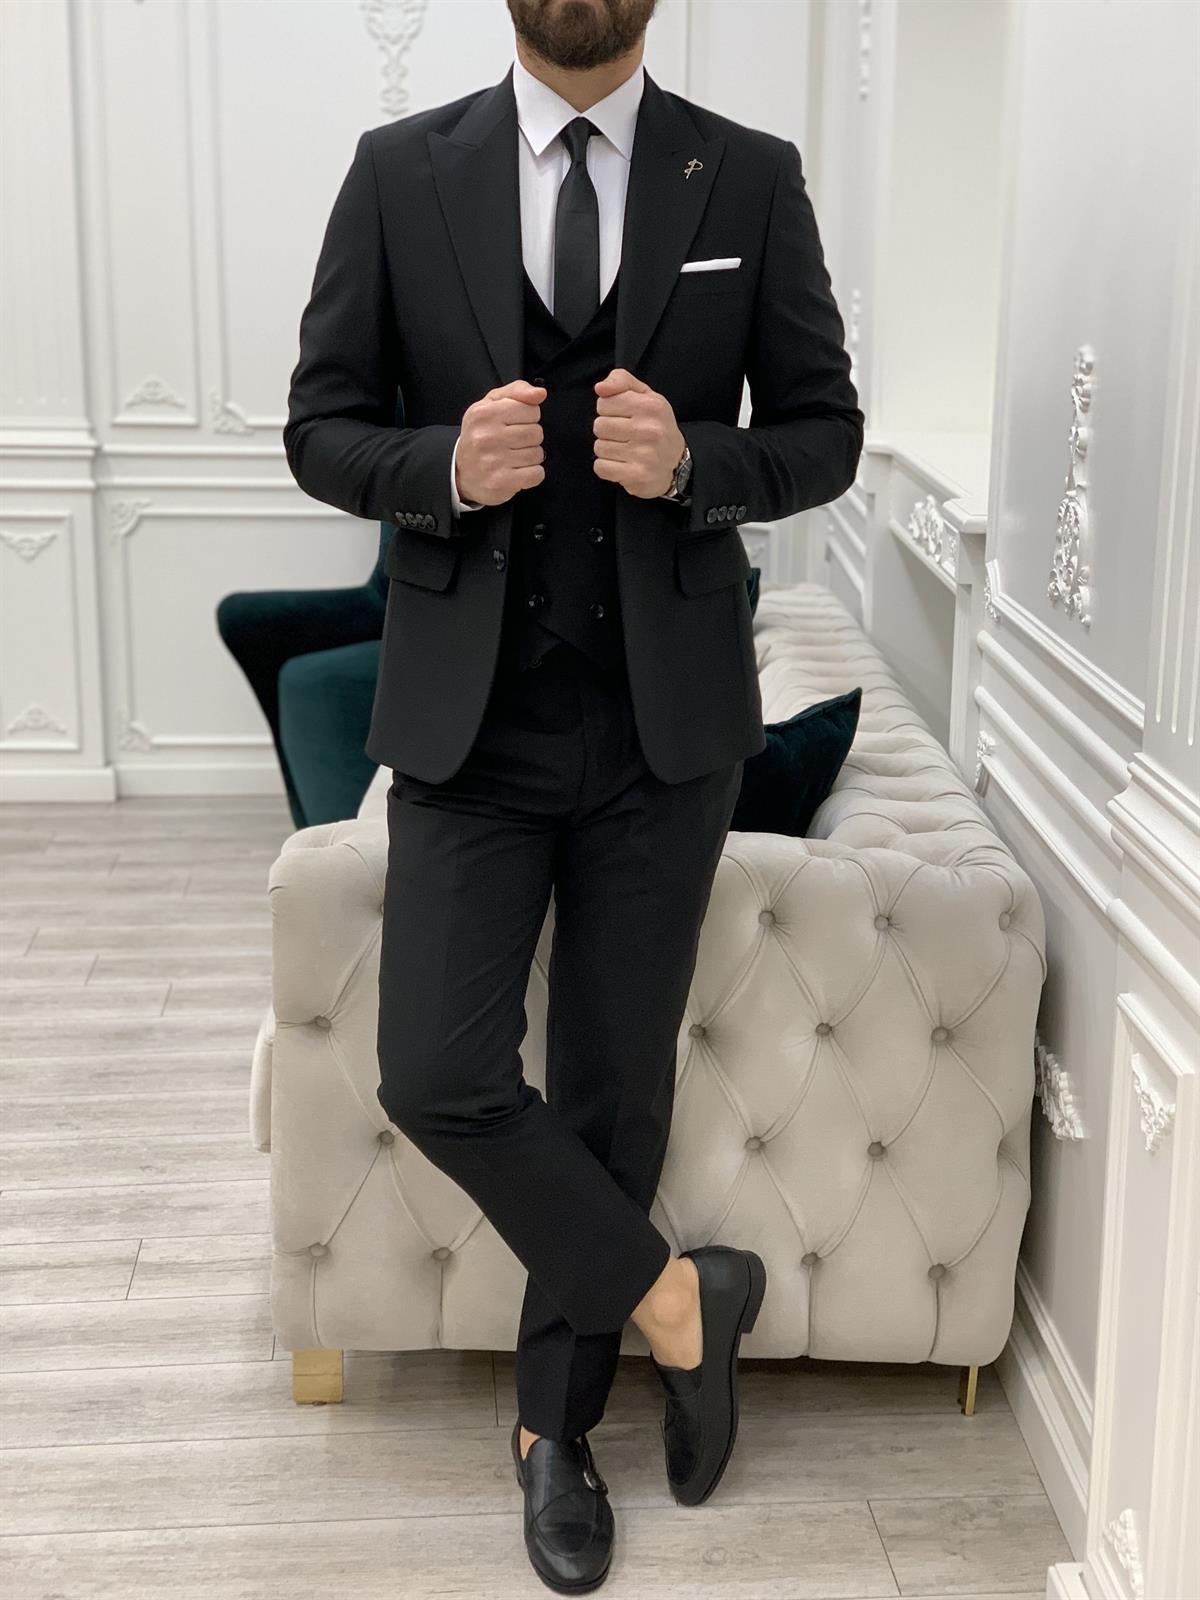 Italian Style Men's Suits | Black suit wedding, Wedding suits men, Suits  men business